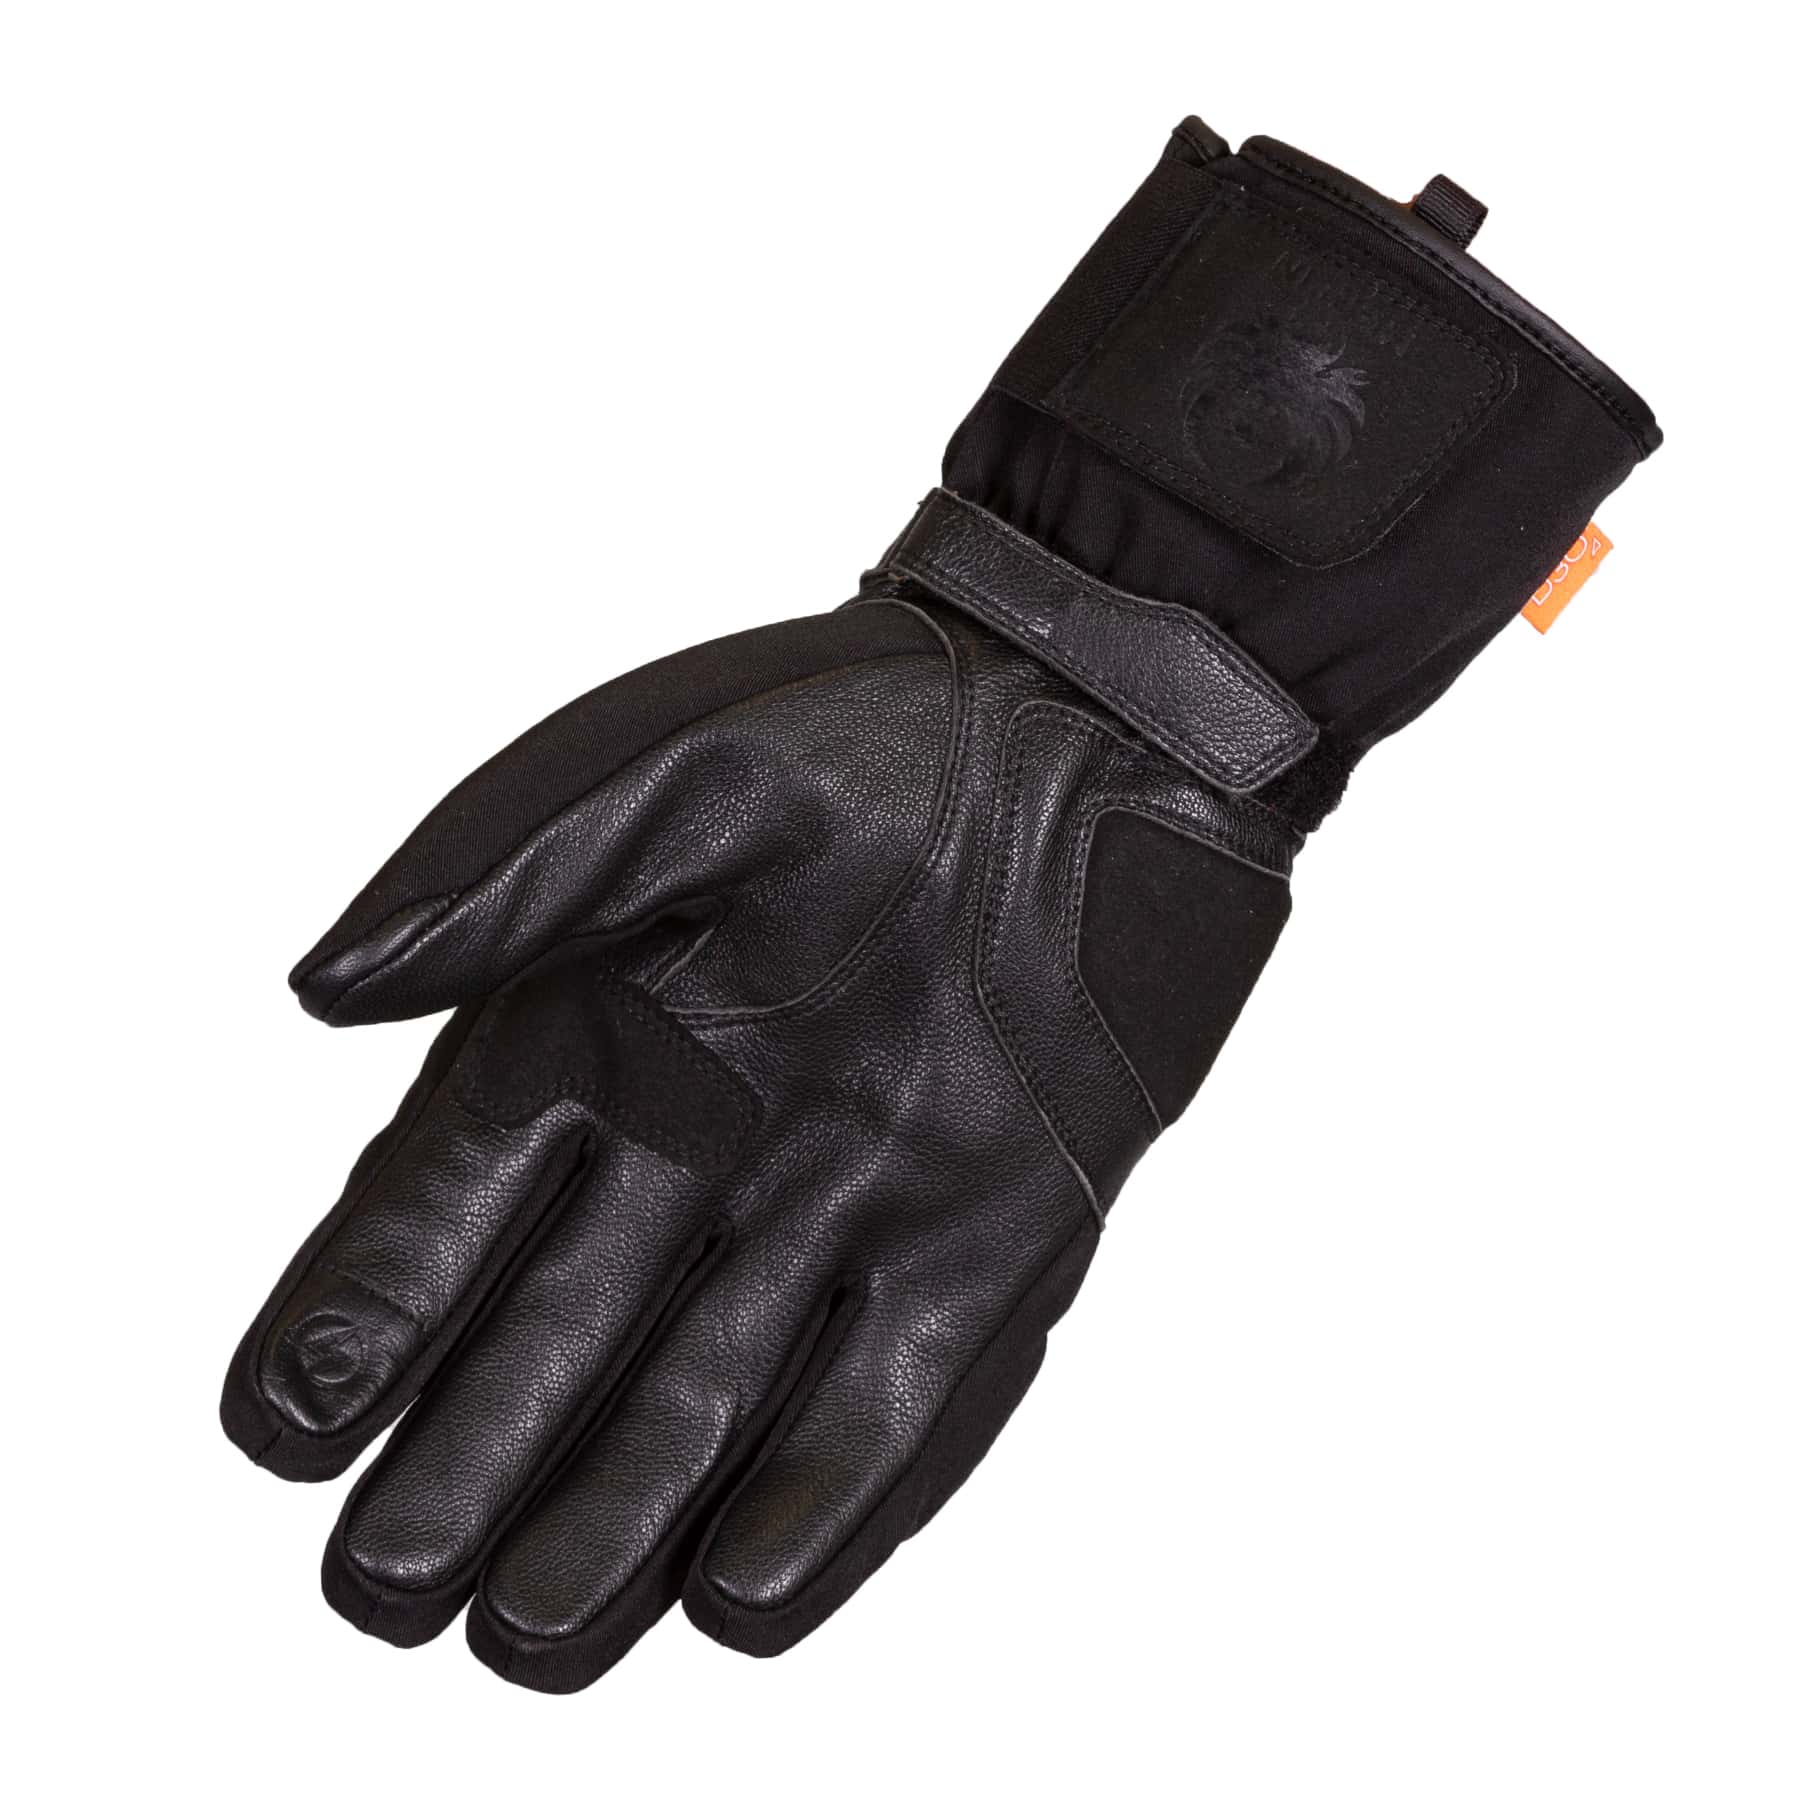 Studio image of the Merlin Summit Heated gloves